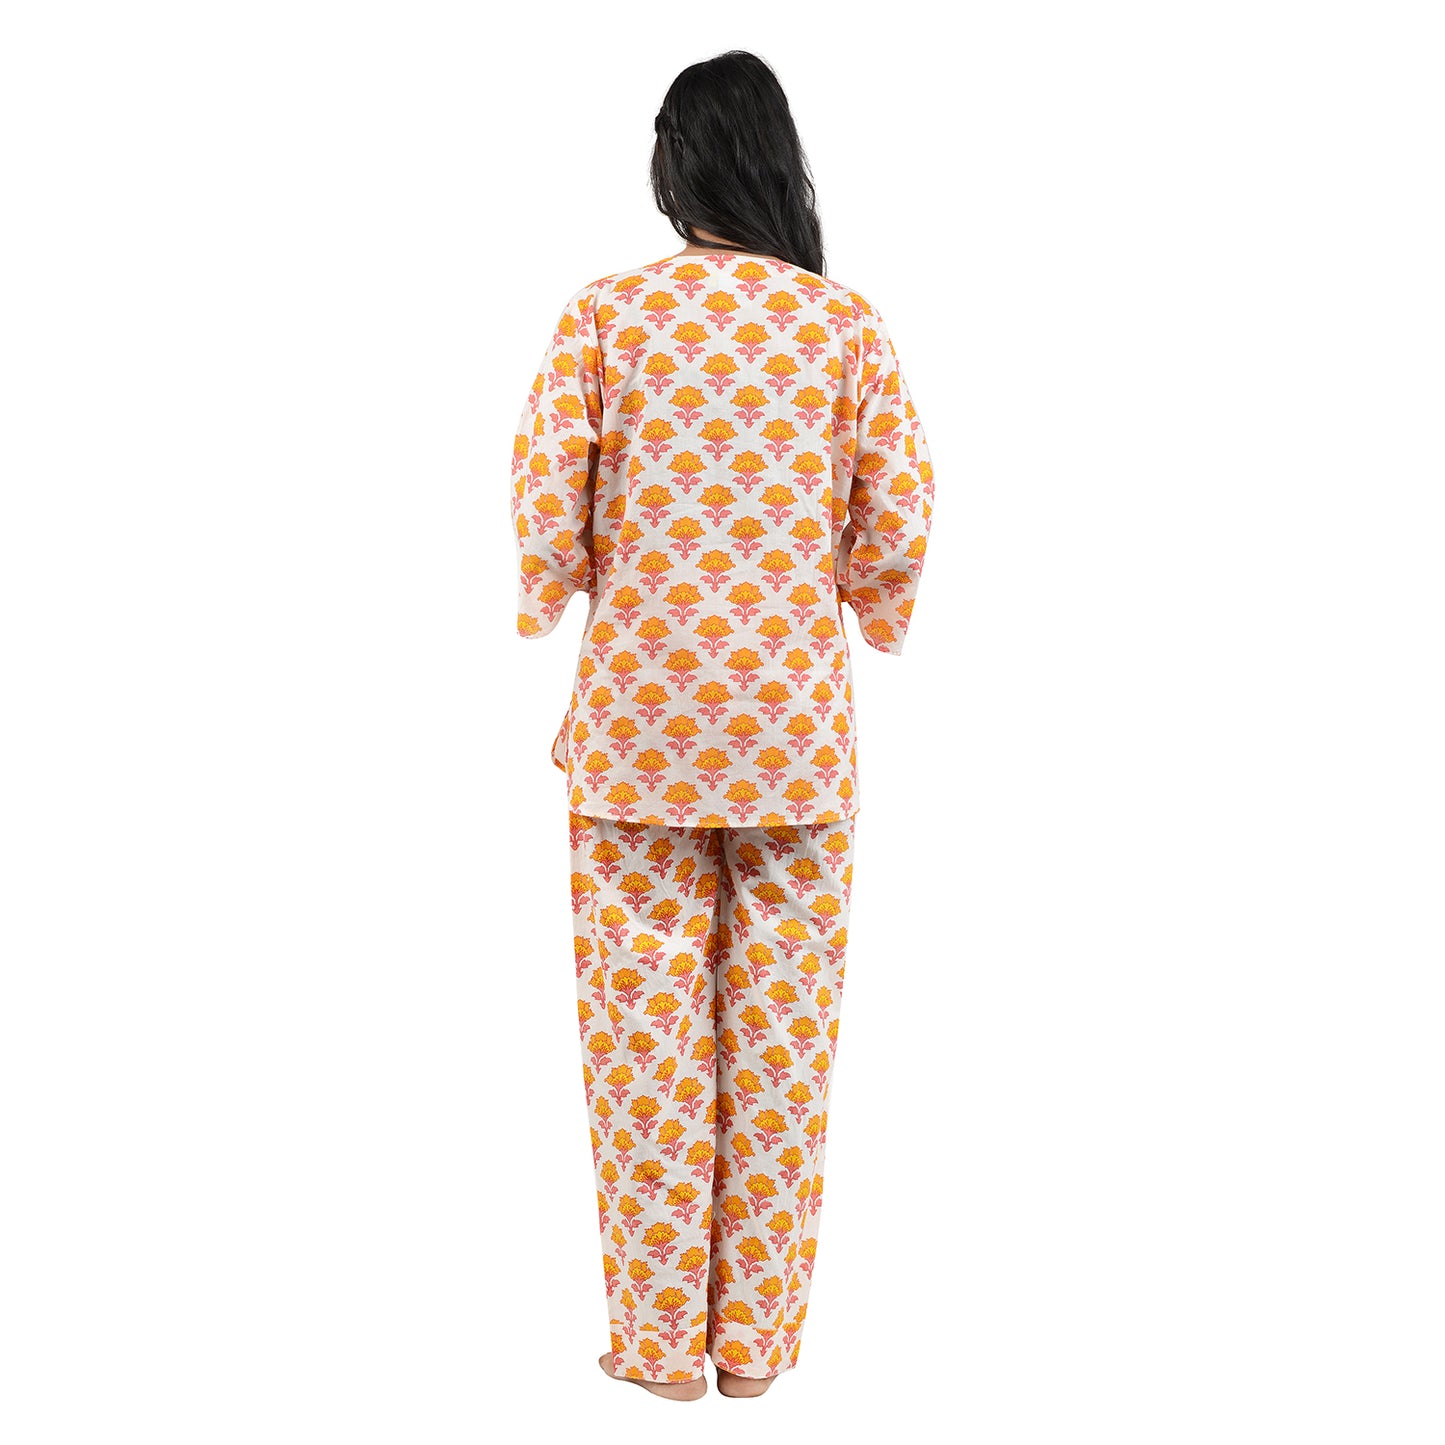 Tangerine Marigold Blossom Printed Pajama Set